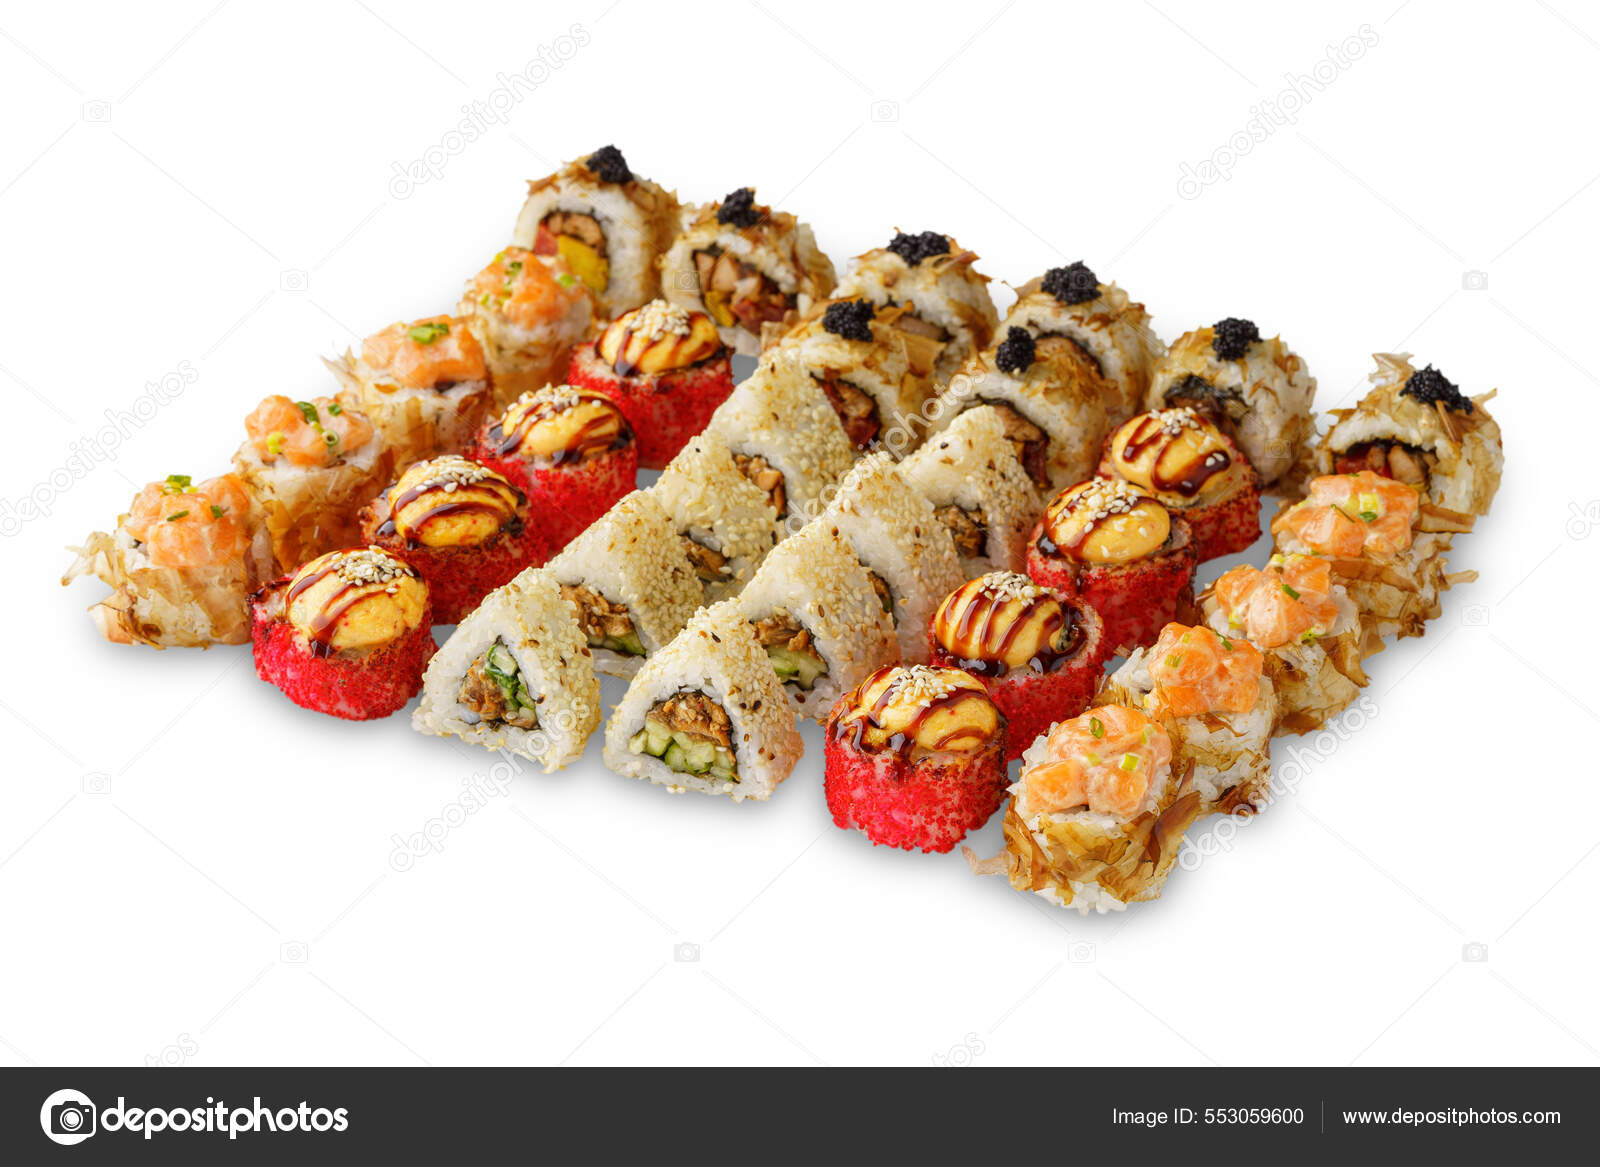 https://st.depositphotos.com/36081112/55305/i/1600/depositphotos_553059600-stock-photo-sushi-roll-set-salmon-eel.jpg